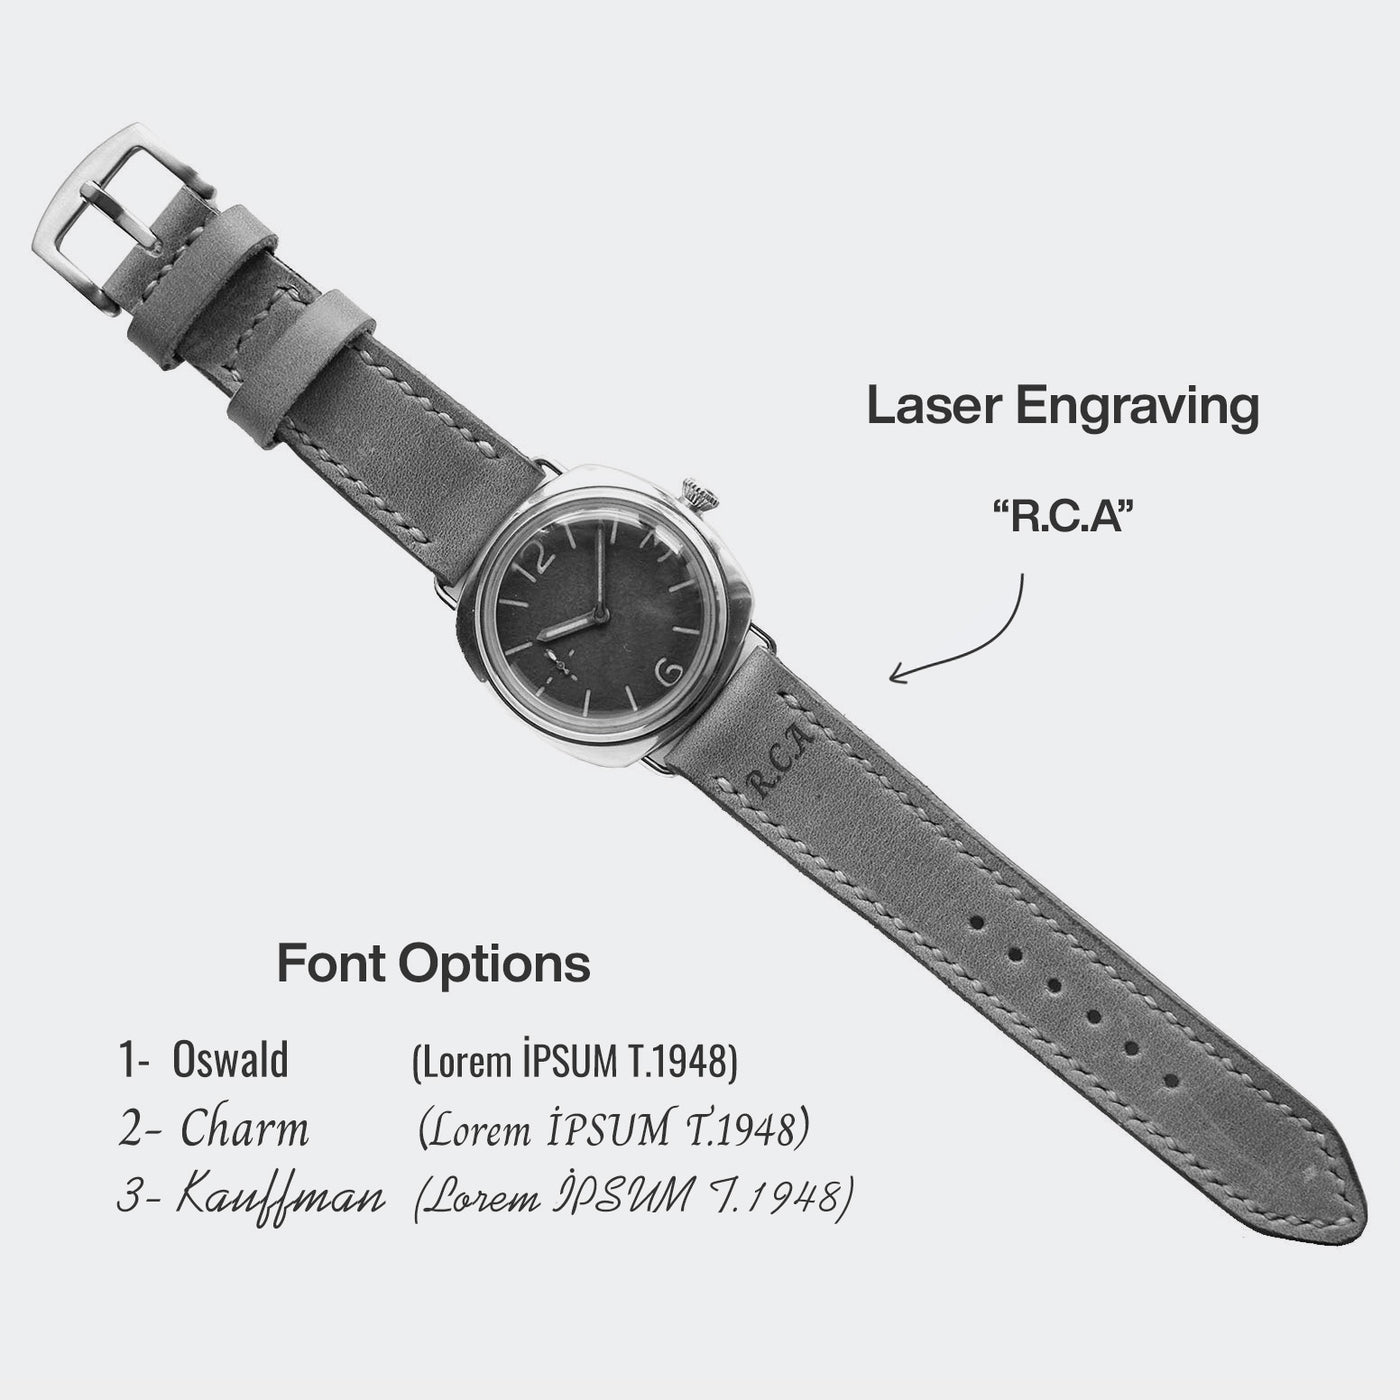 Custom Made VegTan Leather Watch Strap - Mocha